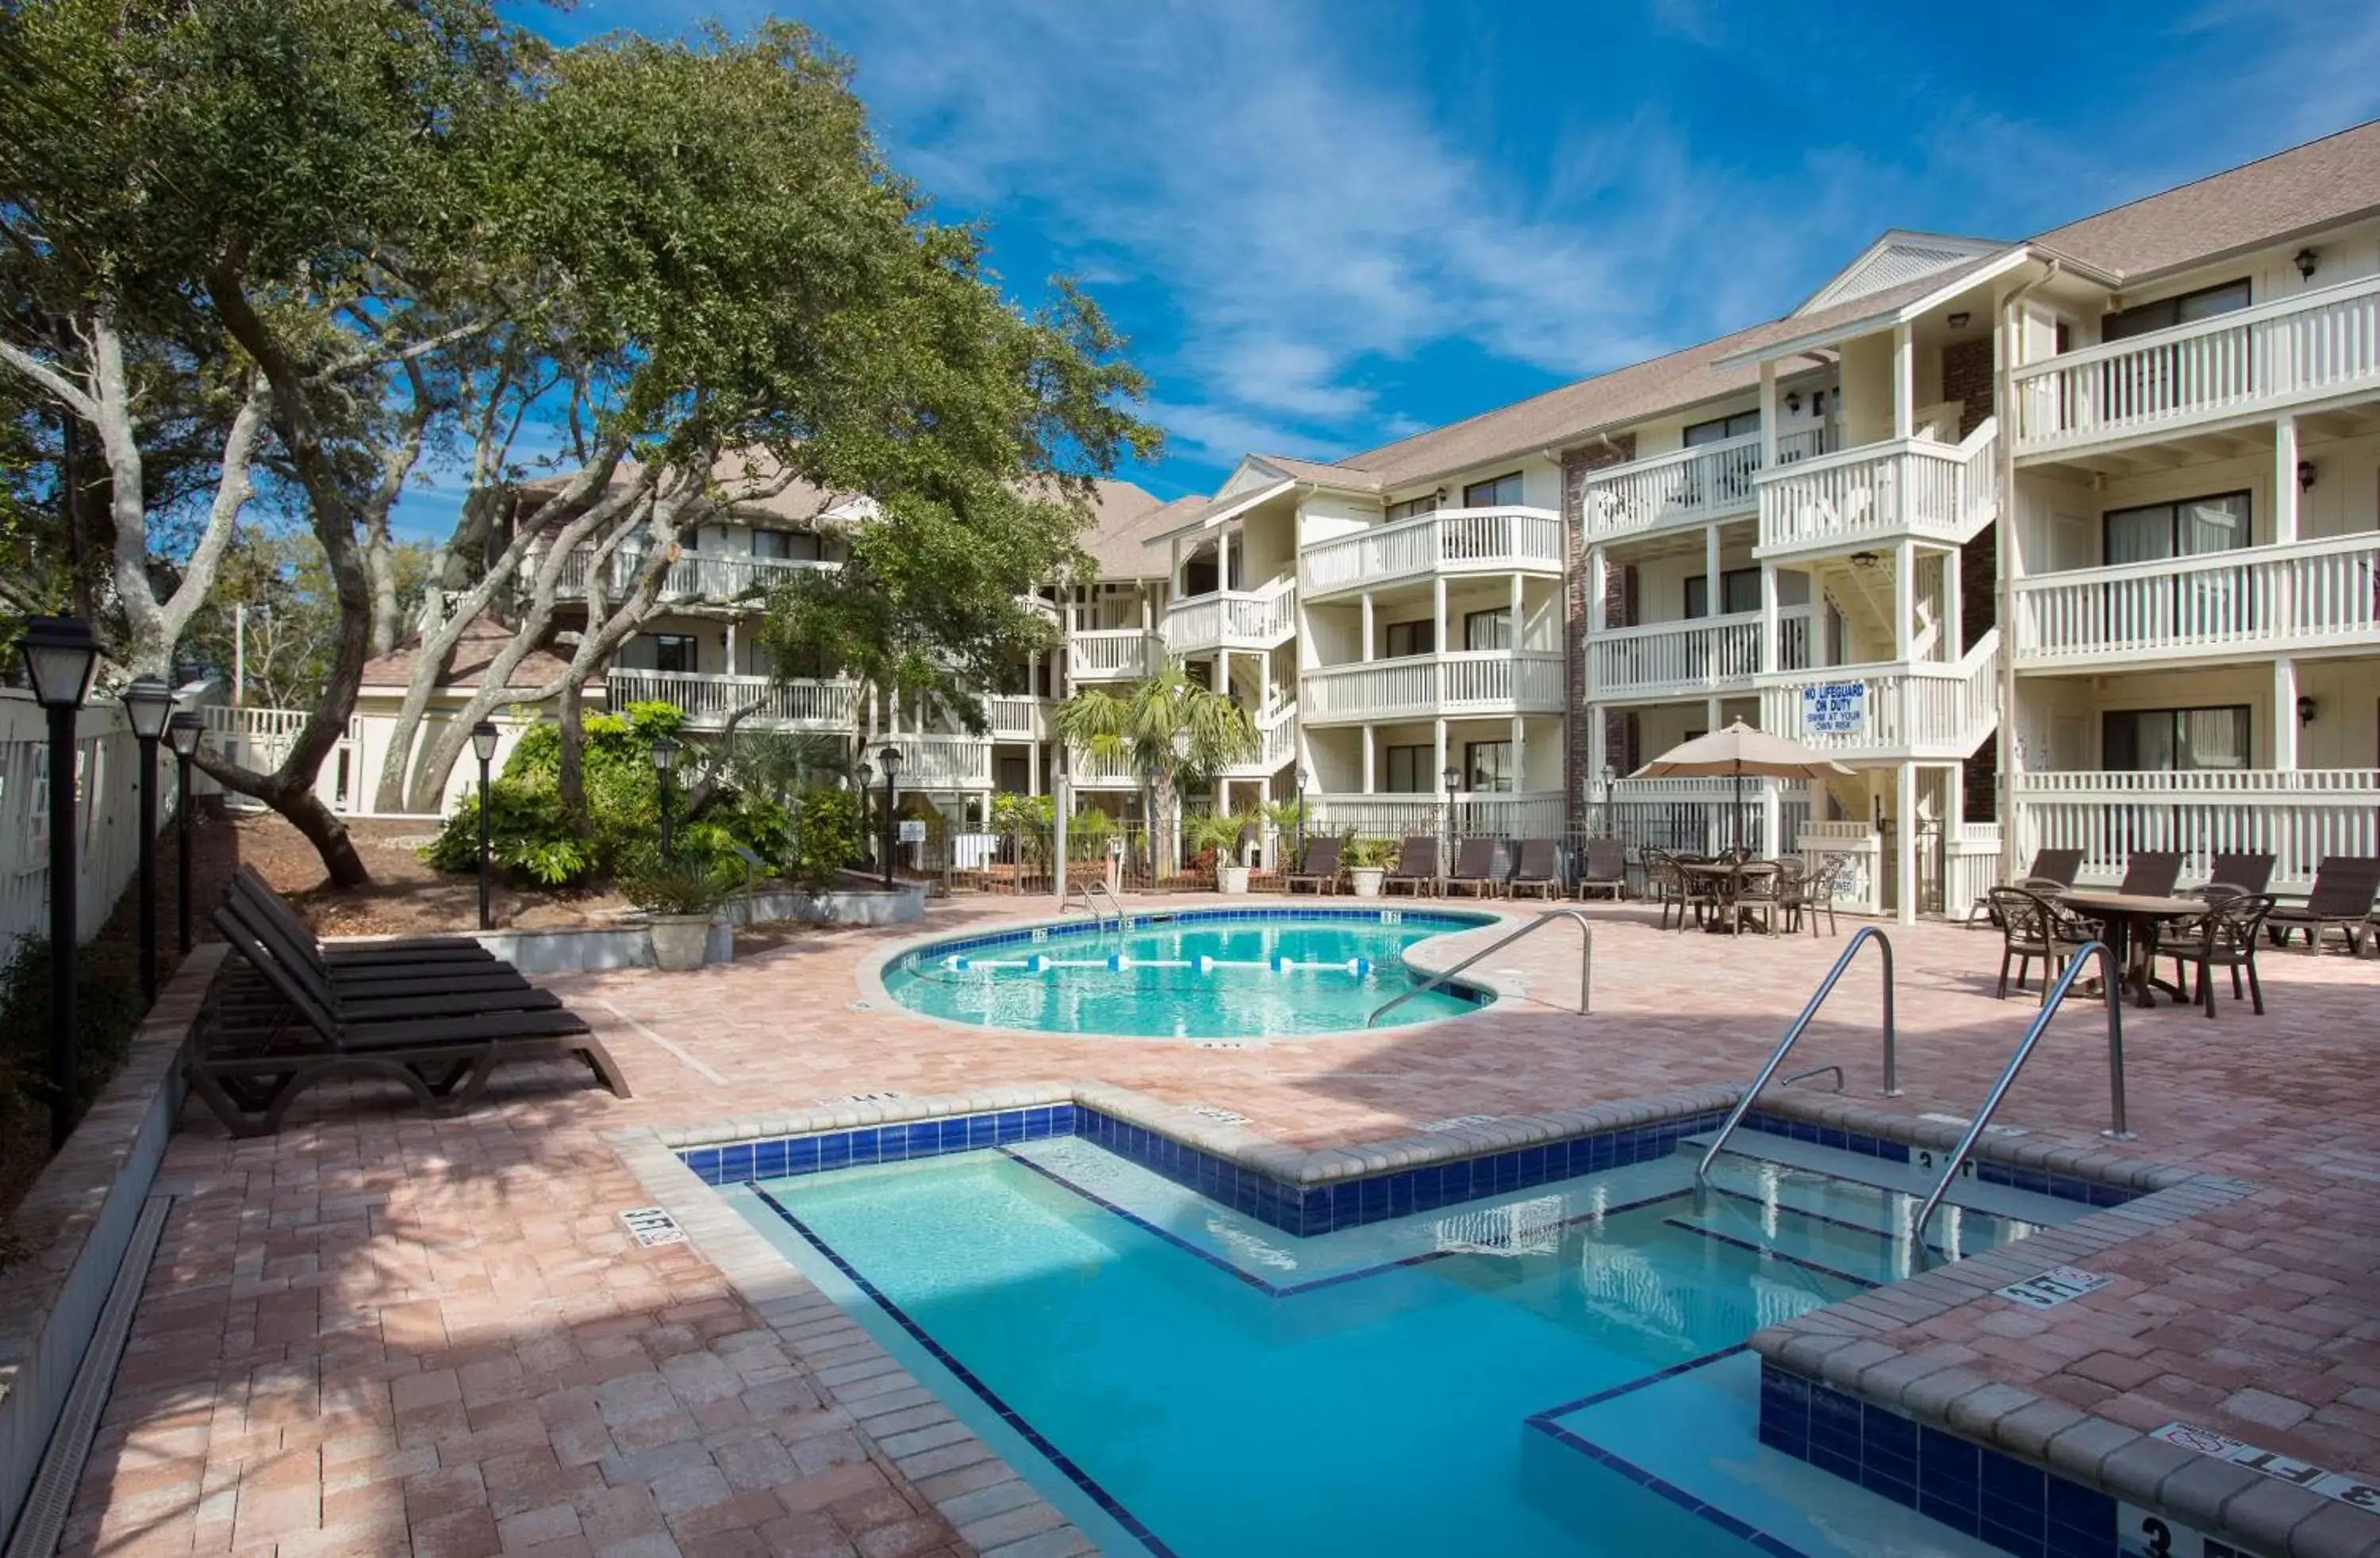 Property building, Swimming Pool in Caribbean Resort Myrtle Beach